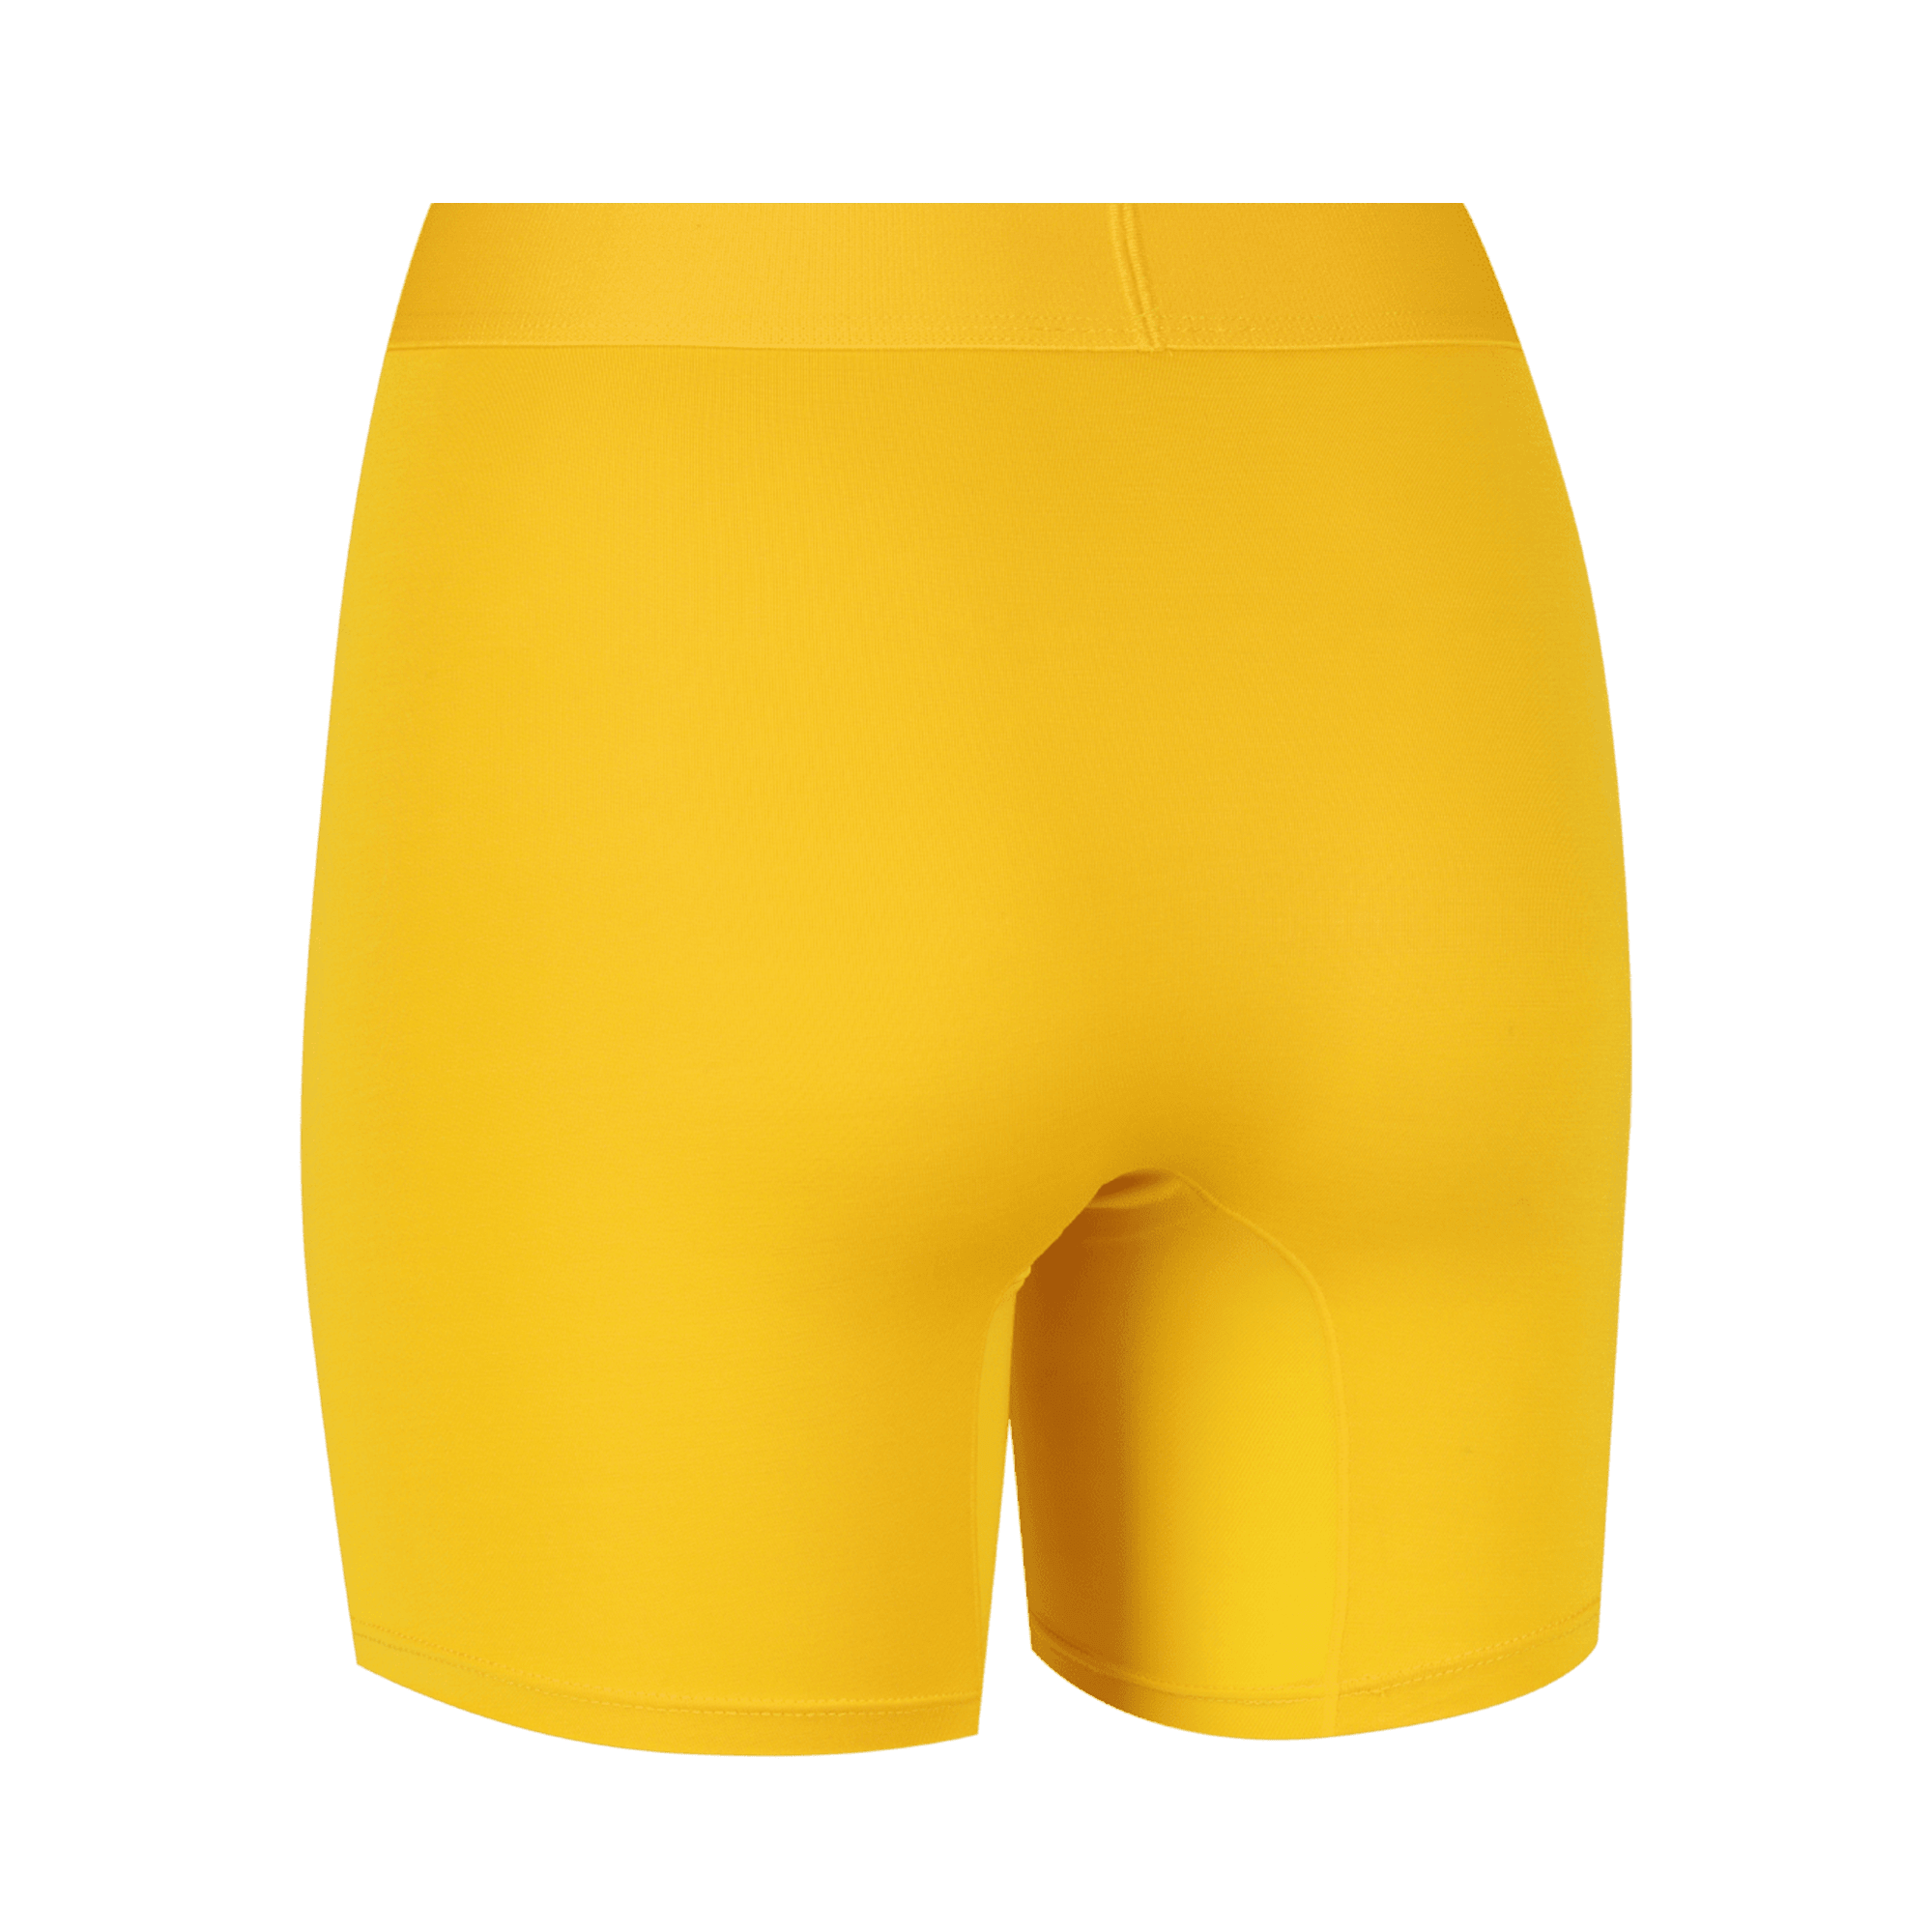 Women's Body Shorts - Butter Scotch